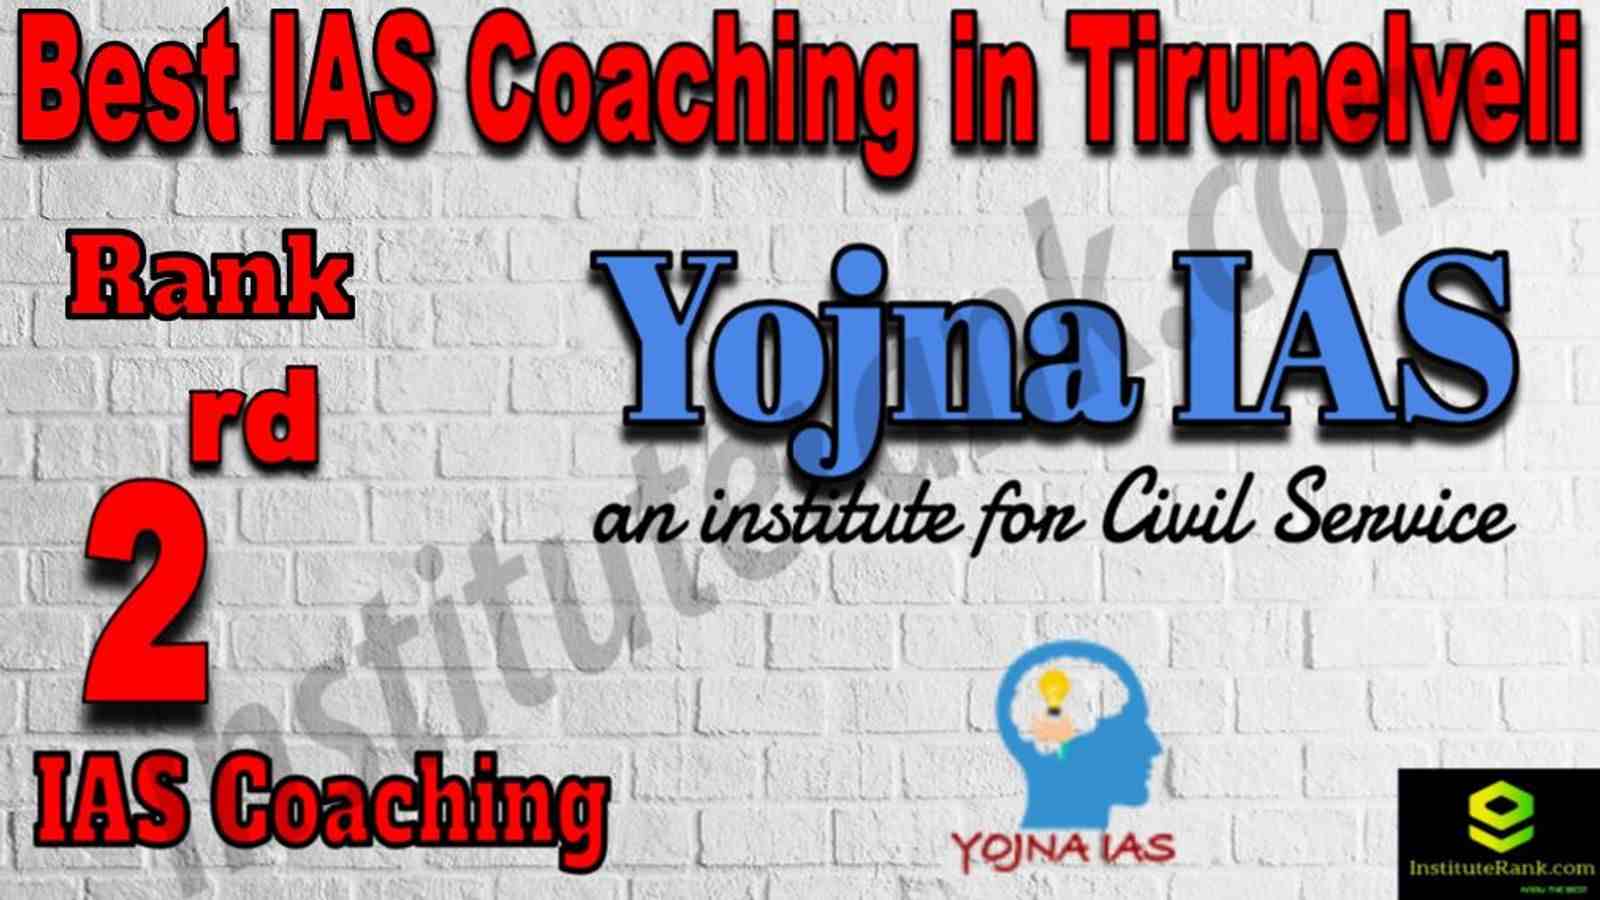 2nd Best IAS Coaching in Tirunelveli